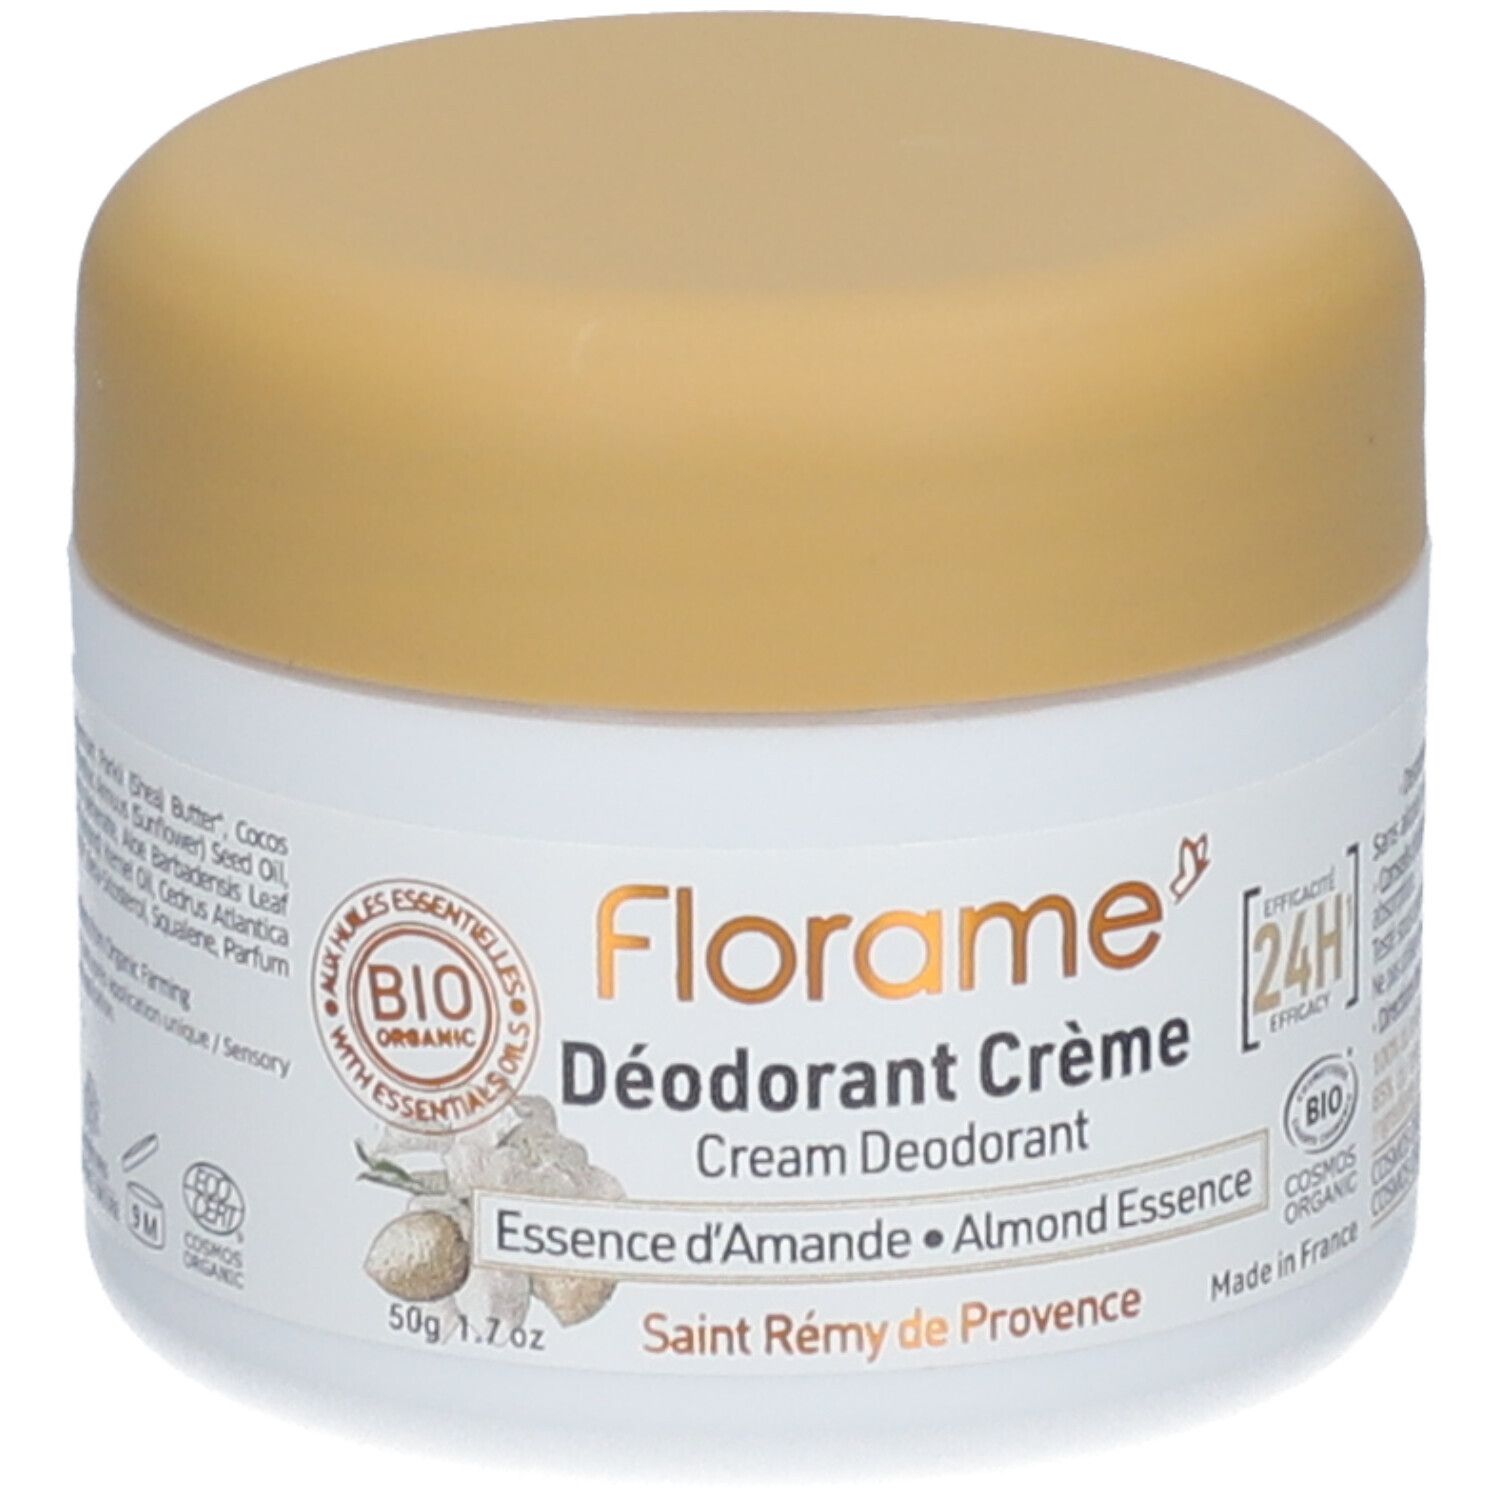 Florame Deodorant Creme Mandelessenz 24H Bio